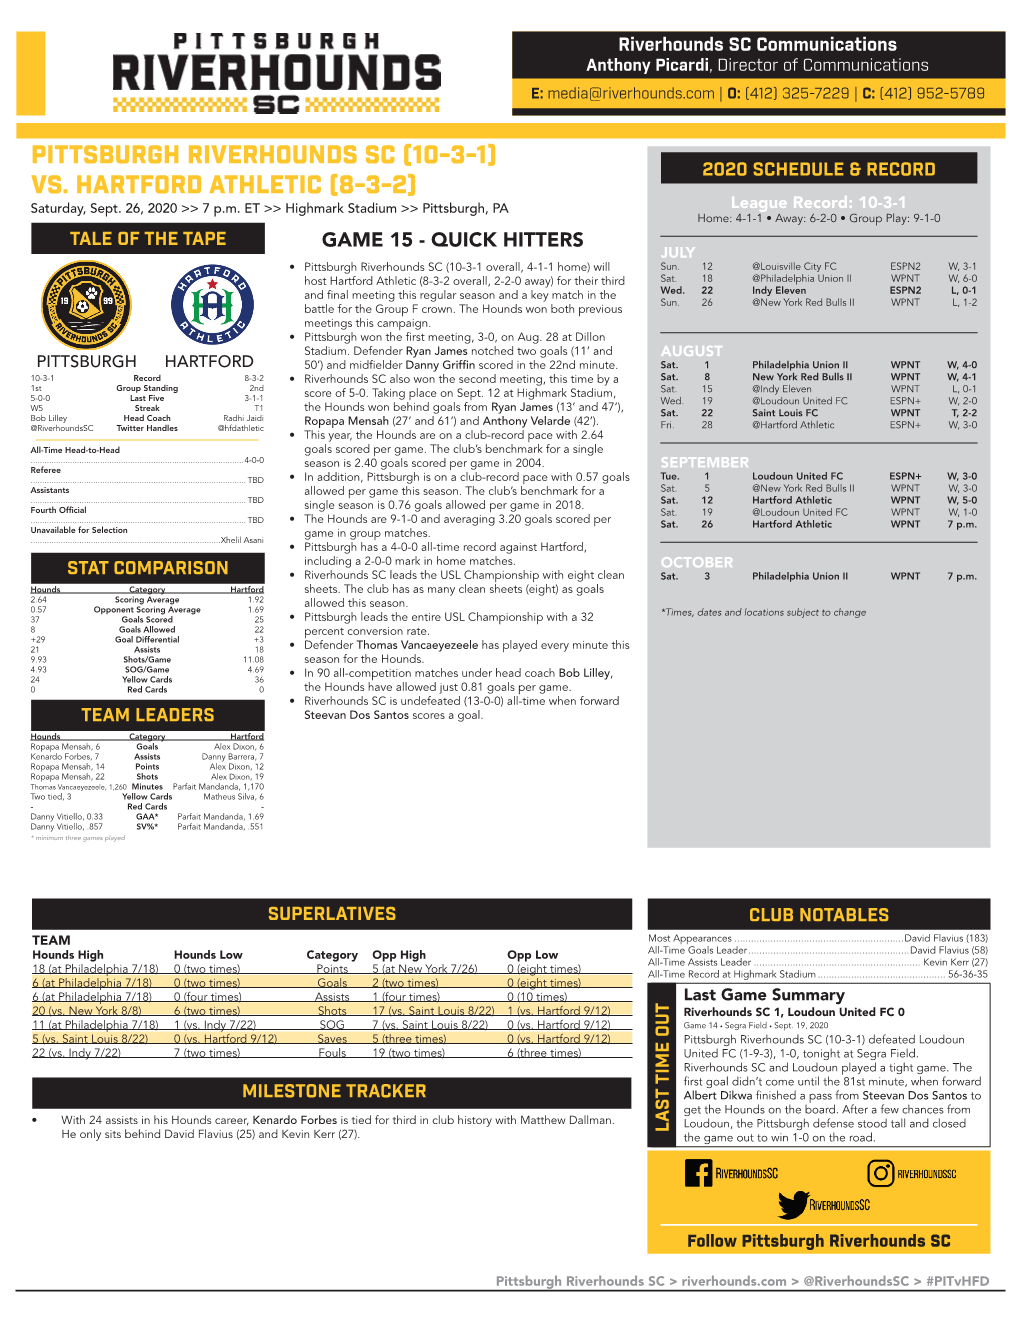 Pittsburgh Riverhounds Sc (10-3-1) 2020 Schedule & Record Vs